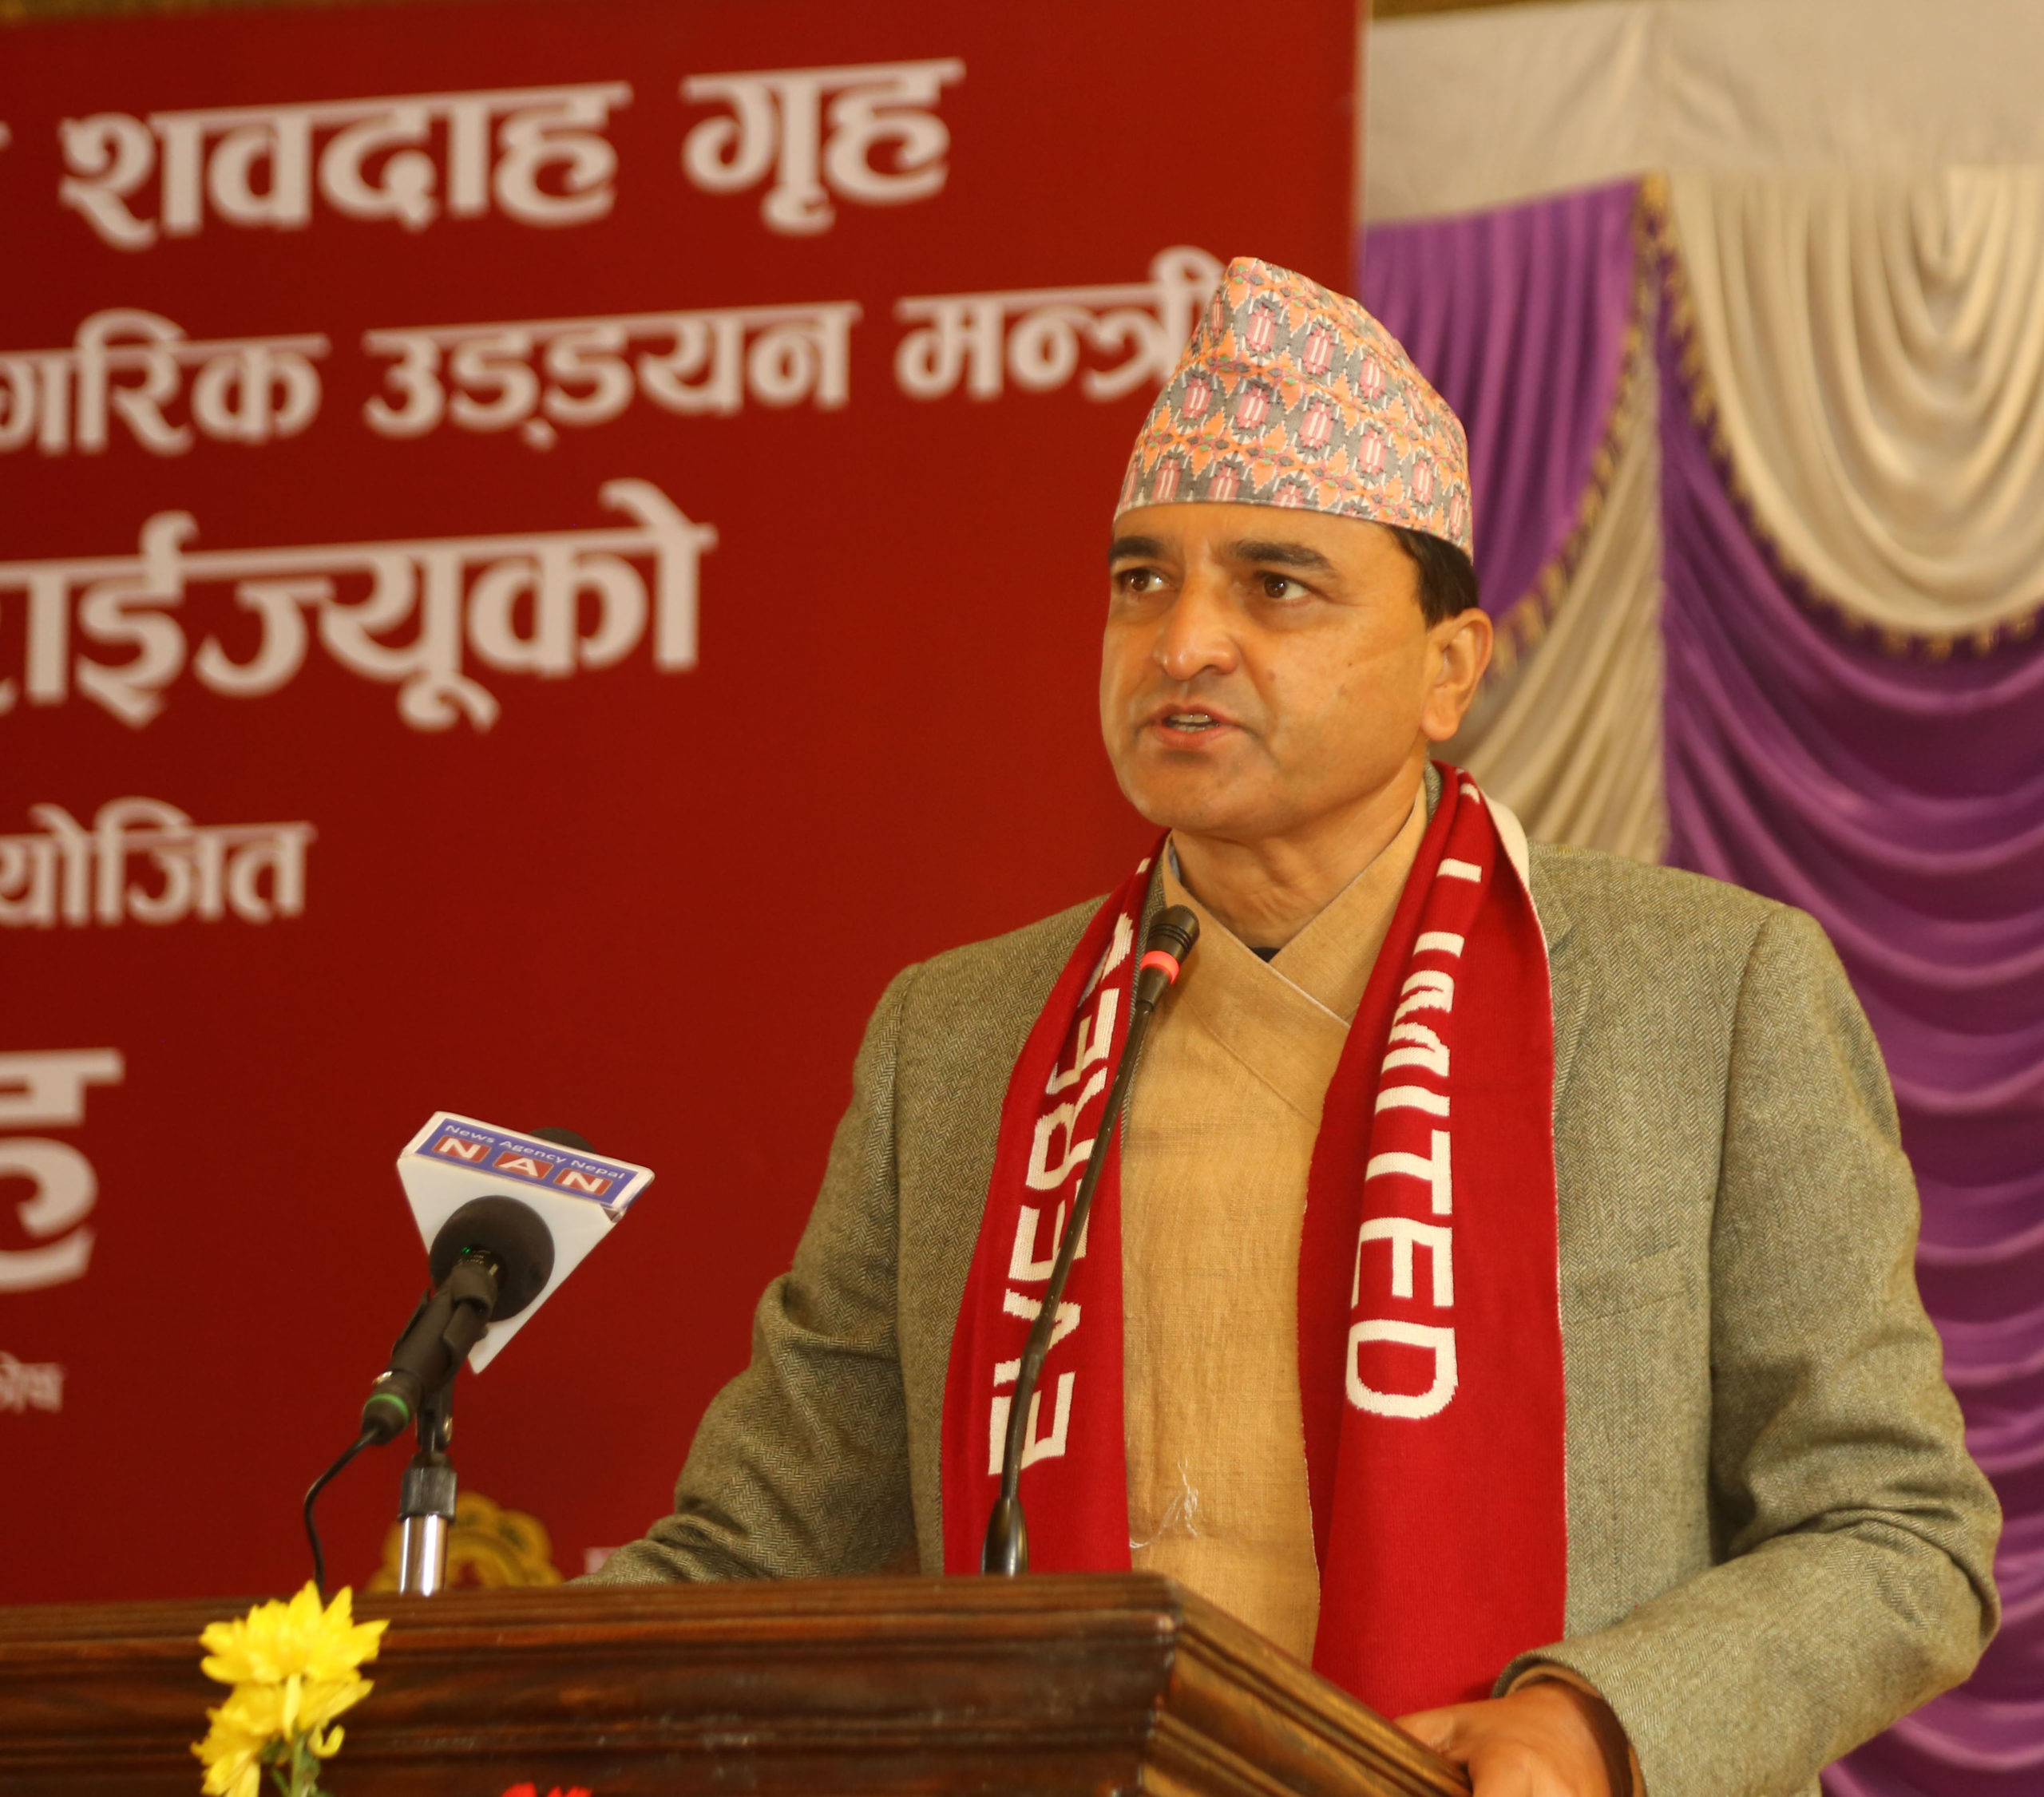 Journalism should always be towards democracy and constitution: Bhattarai